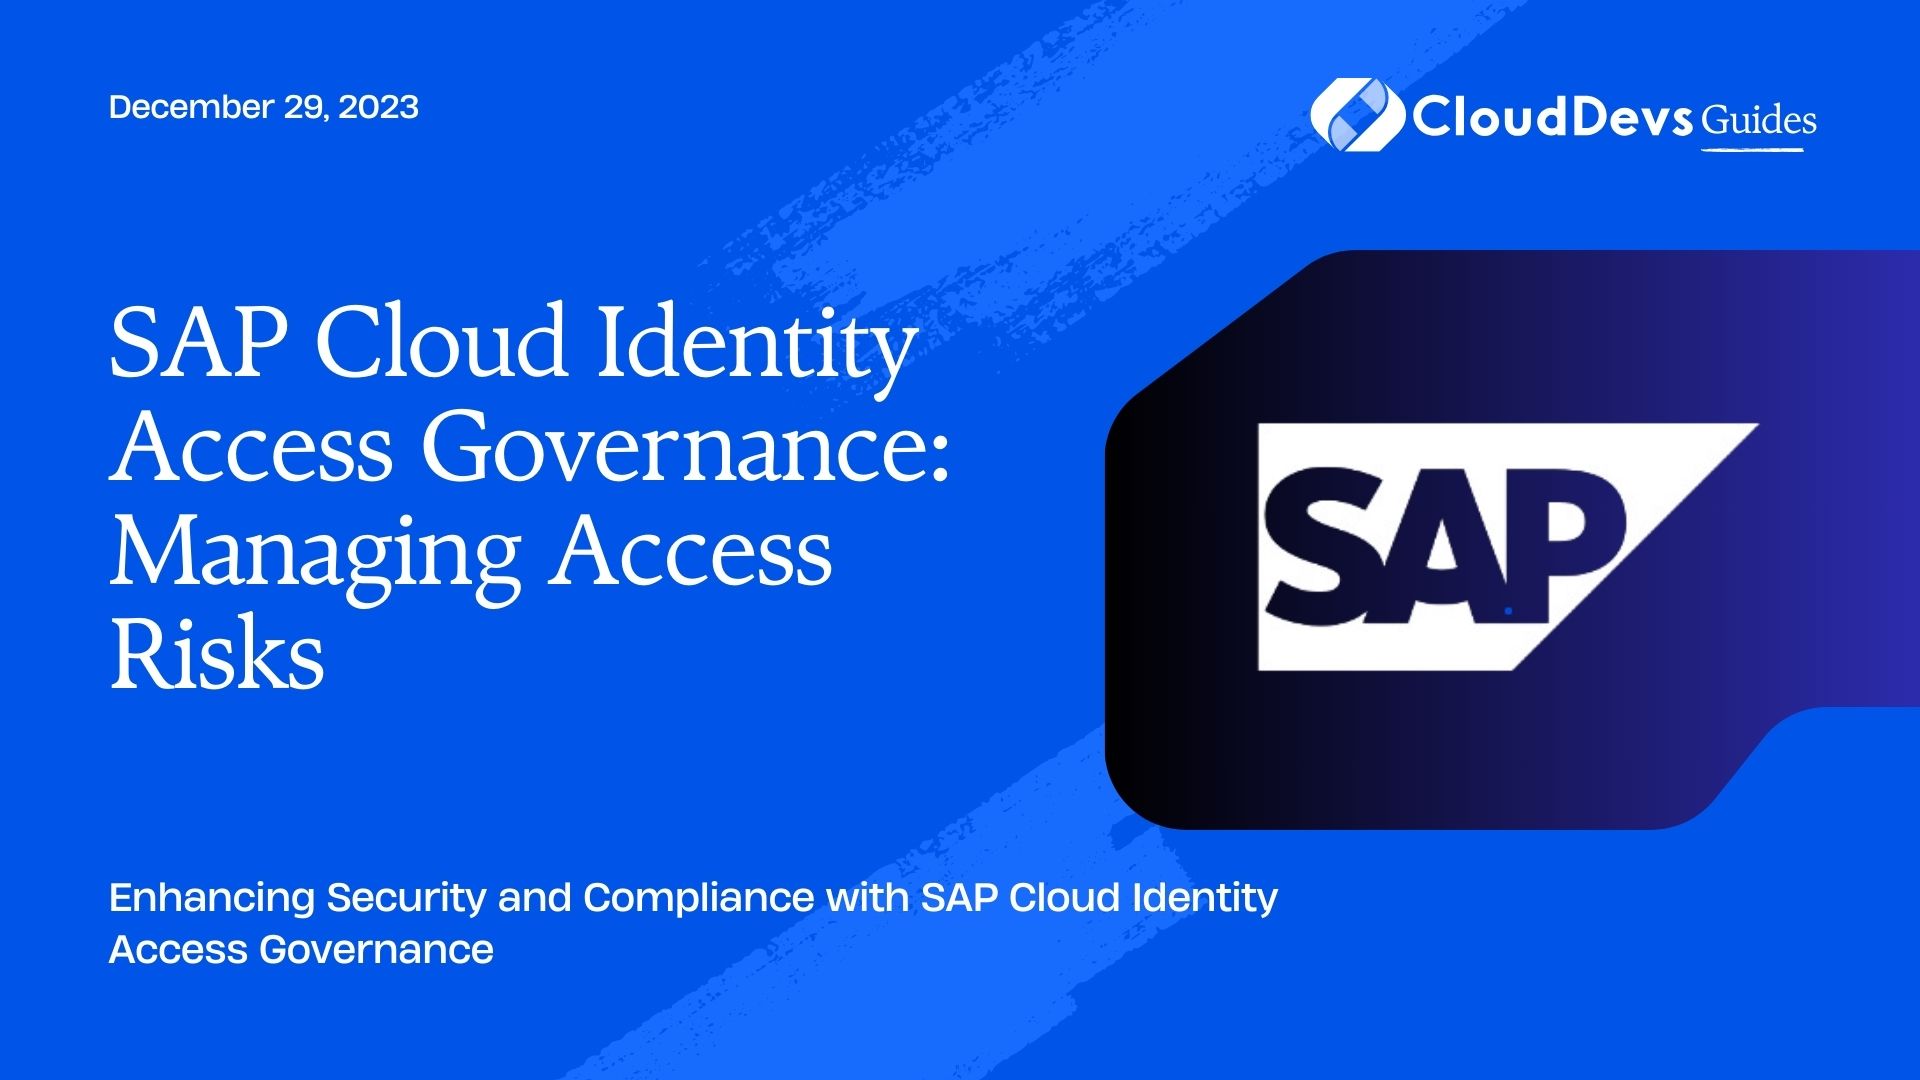 SAP Cloud Identity Access Governance: Managing Access Risks